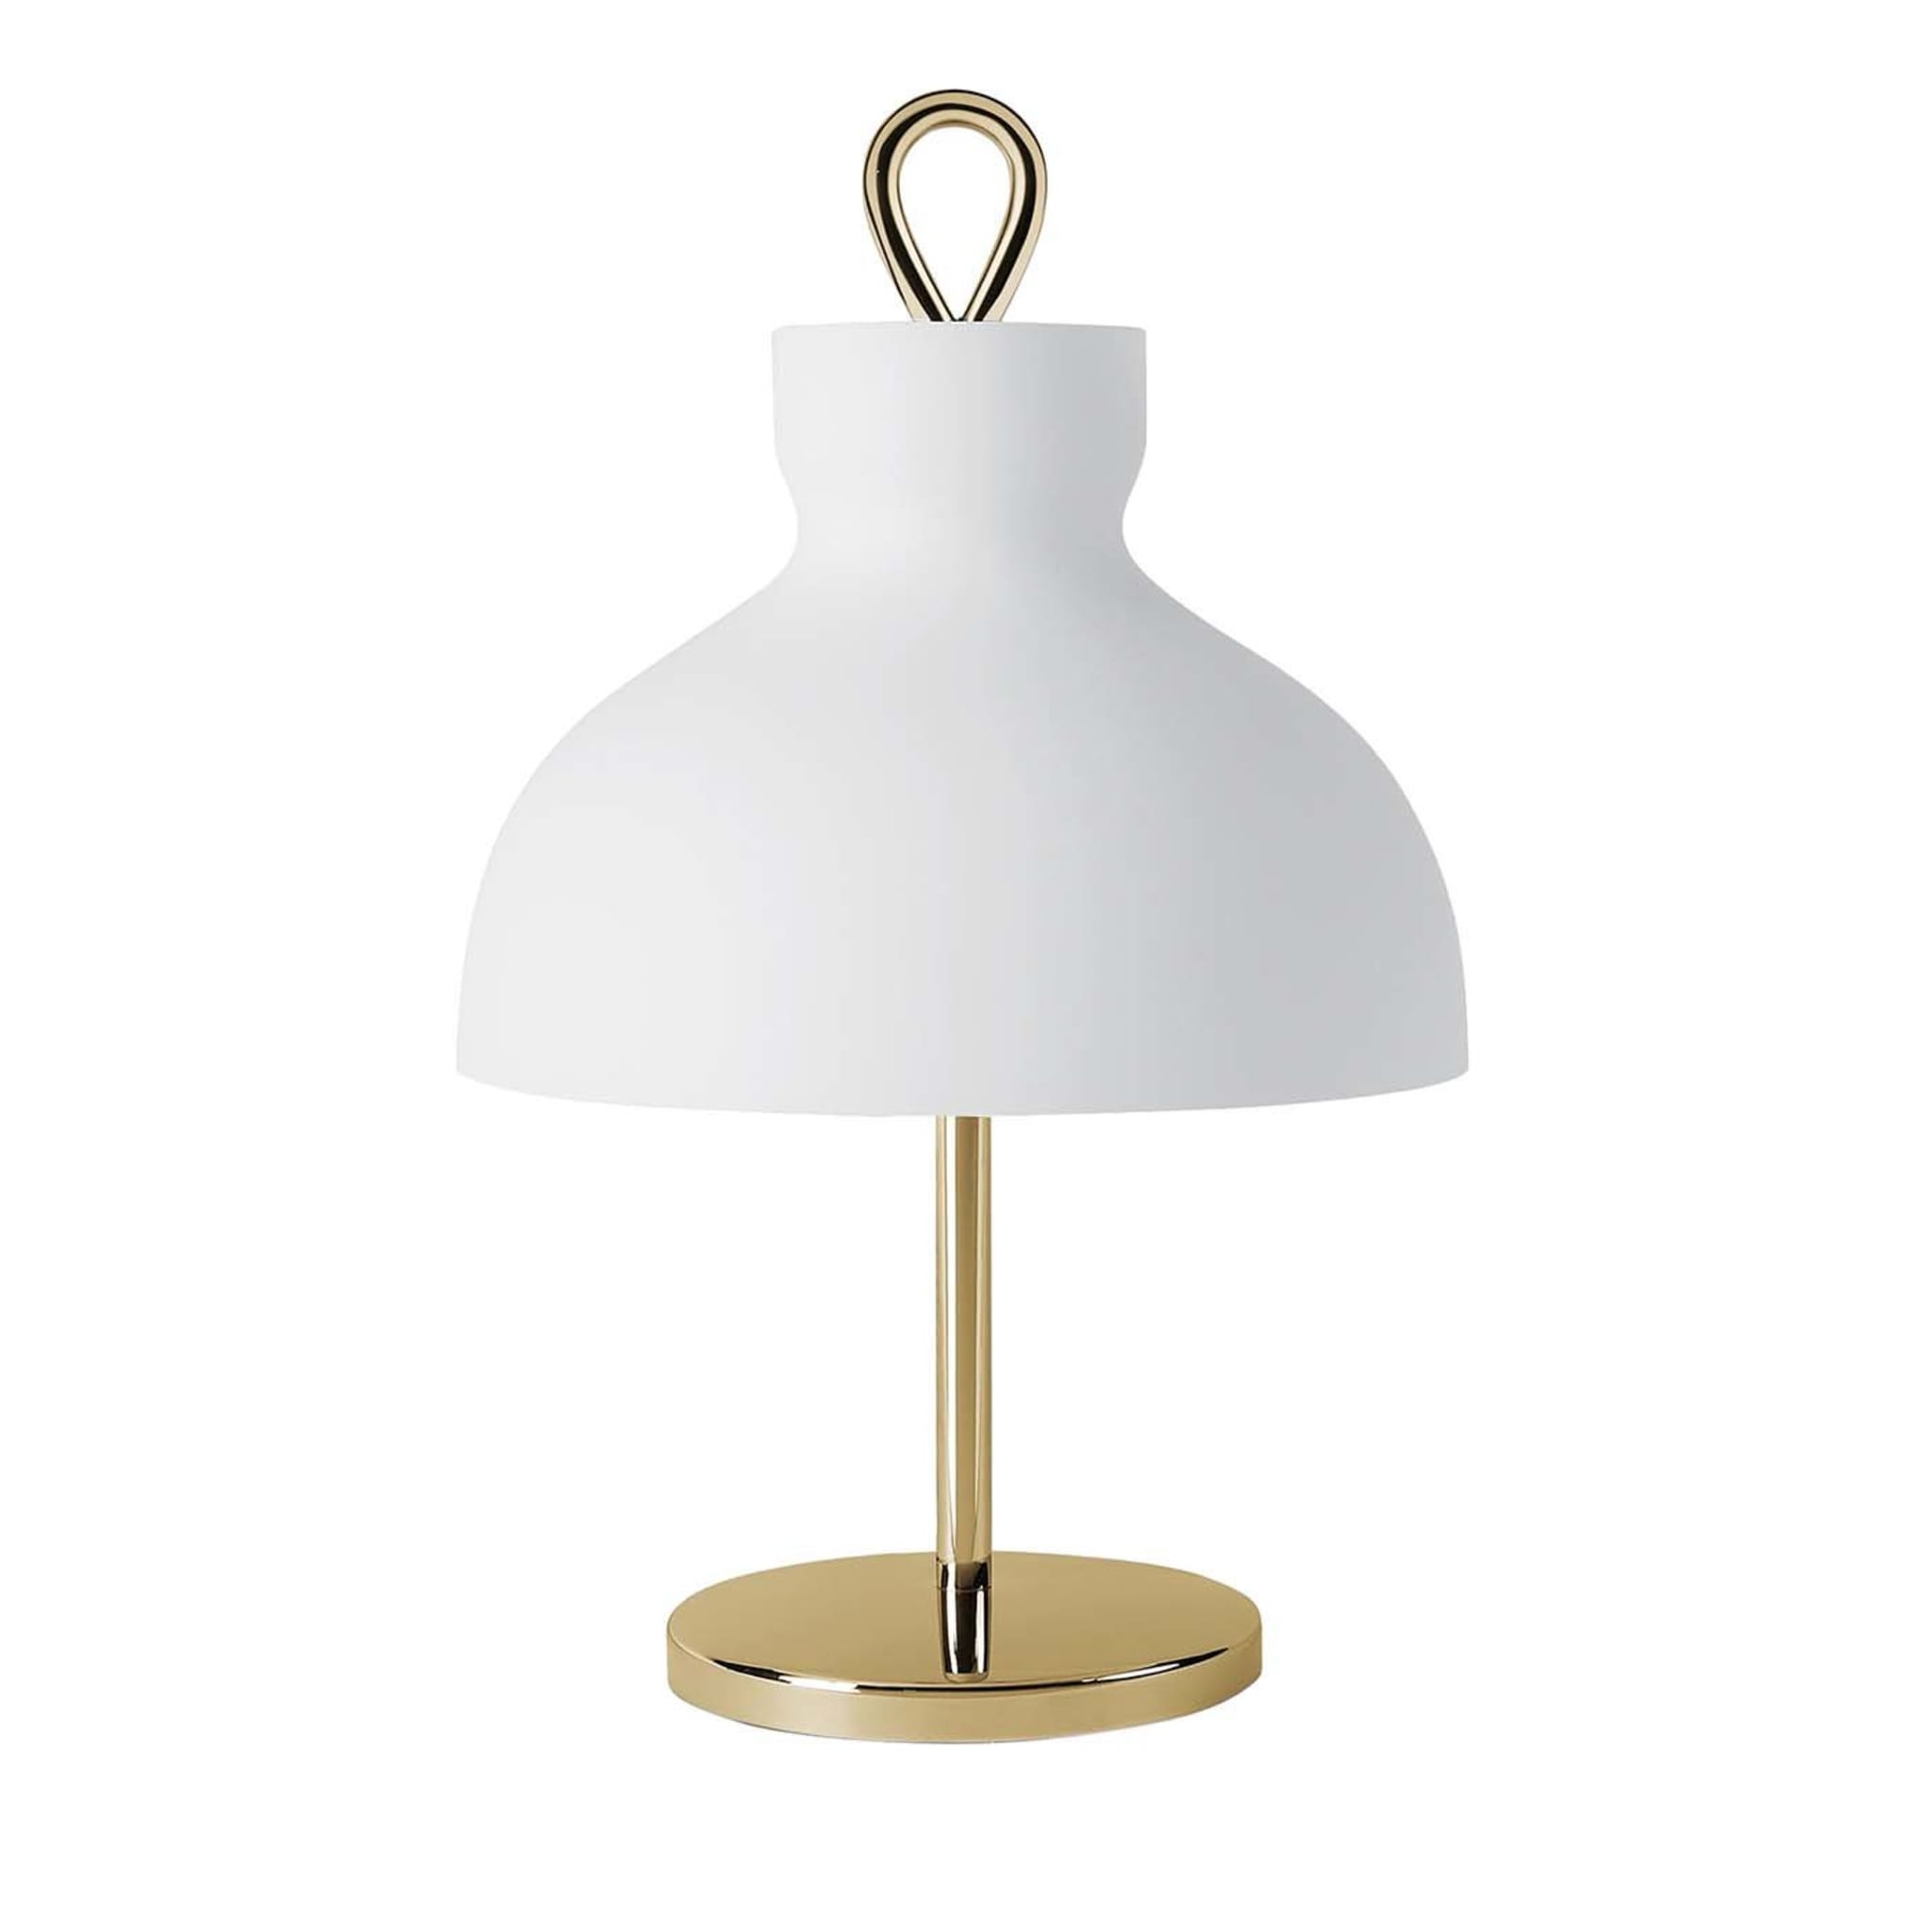 Arenzano Bassa Brass Table Lamp by Ignazio Gardella - Main view